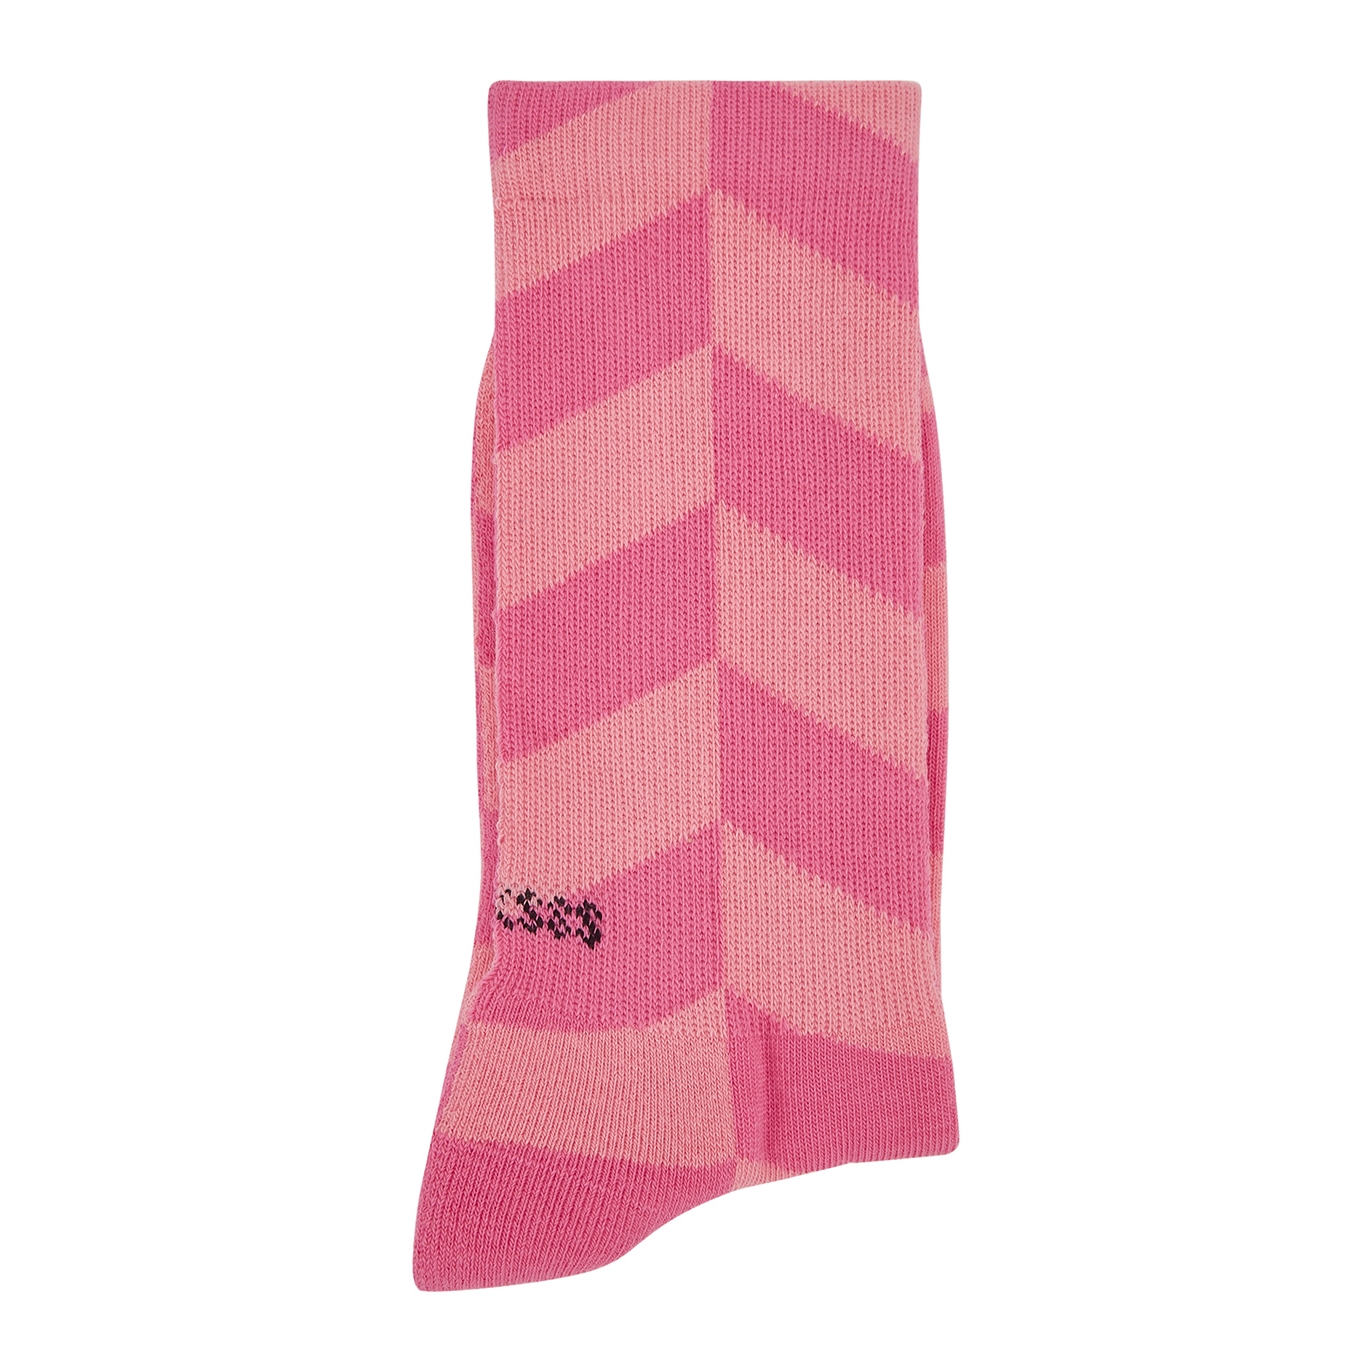 Socksss Marianne Pink Checked Cotton-blend Socks - M/L